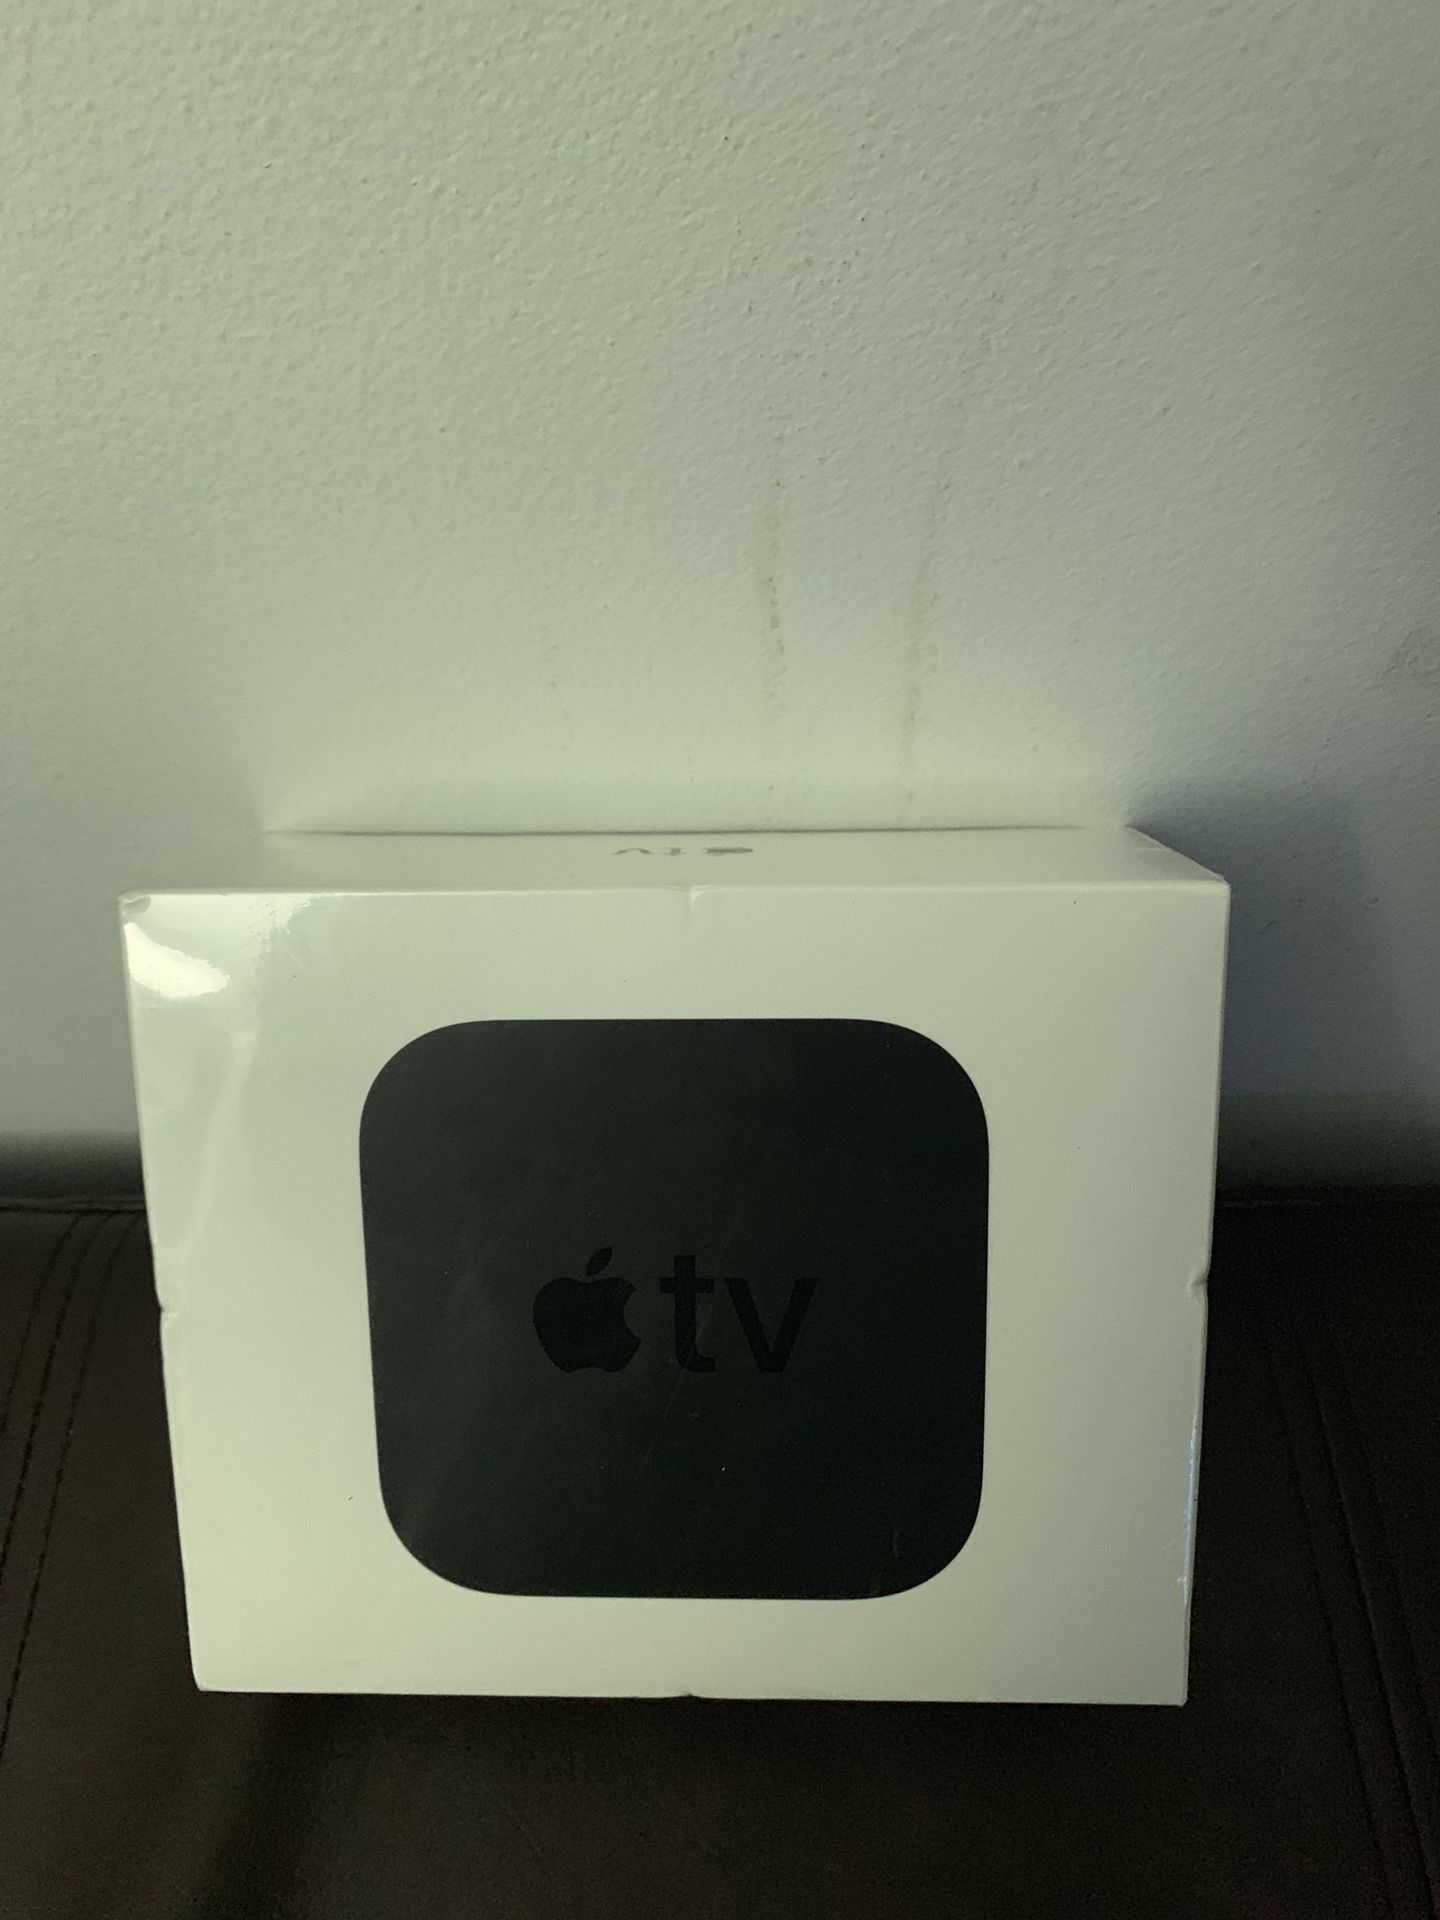 32g Apple TV “NEW”